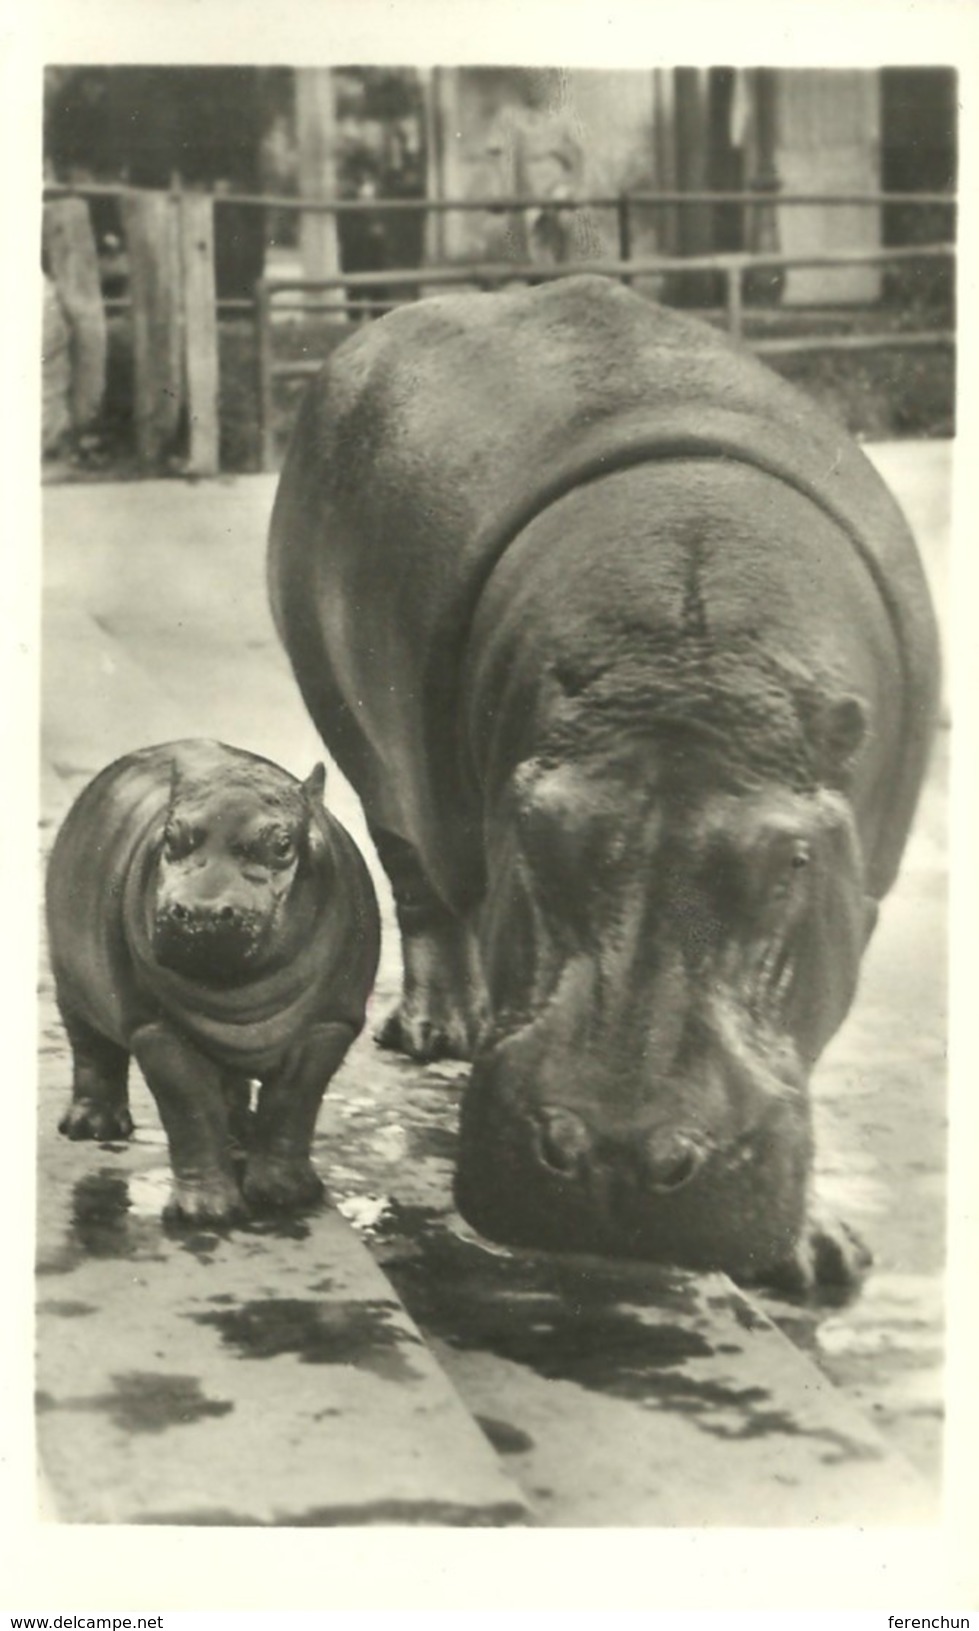 HIPPOPOTAMUS * BABY HIPPO * ANIMAL * ZOO & BOTANICAL GARDEN * BUDAPEST * KA 460 12 1 * Hungary - Ippopotami